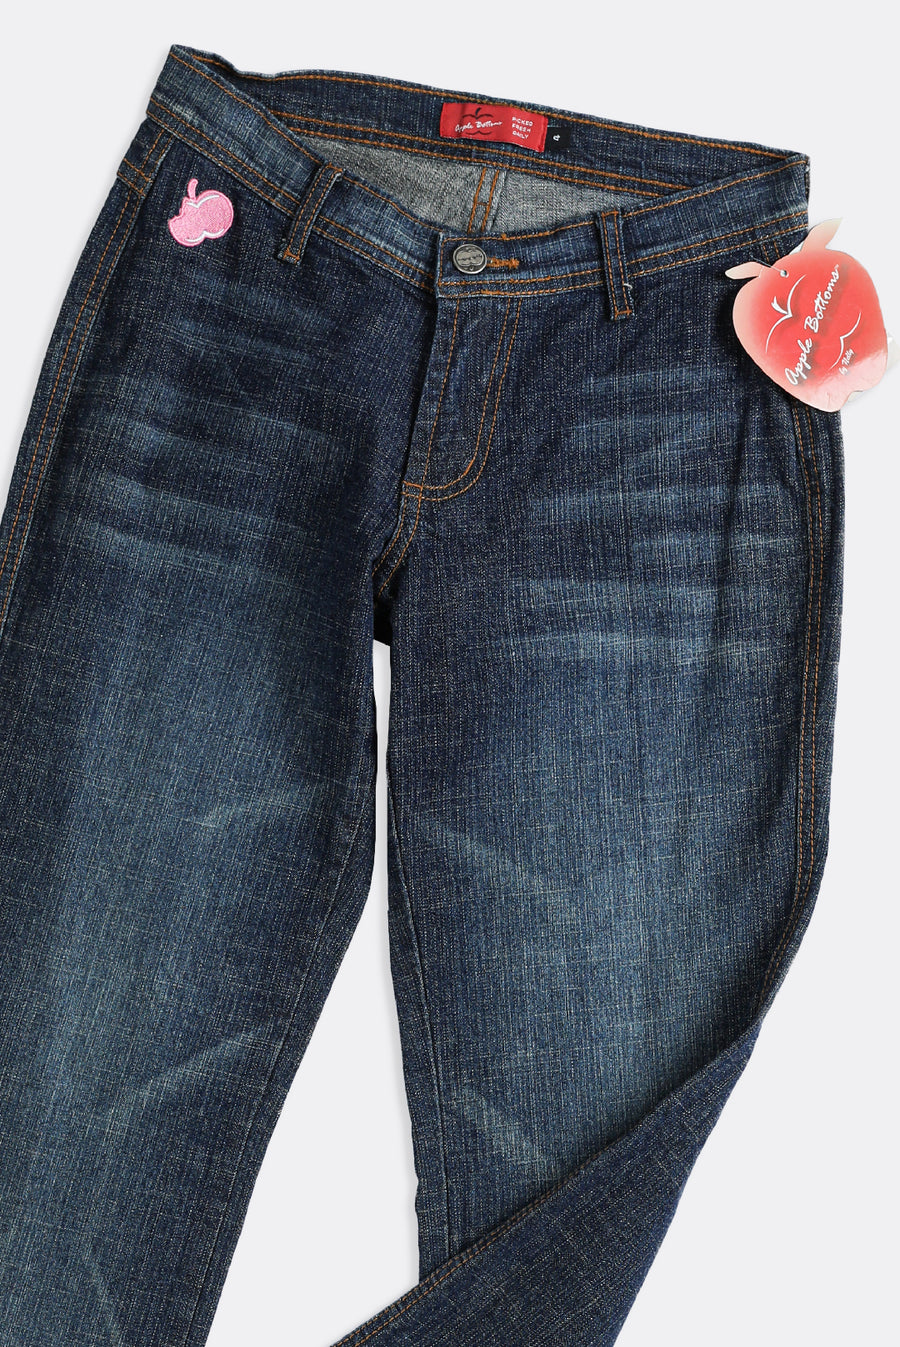 Deadstock Apple Bottom Pink Embroidered Denim Pants - W26